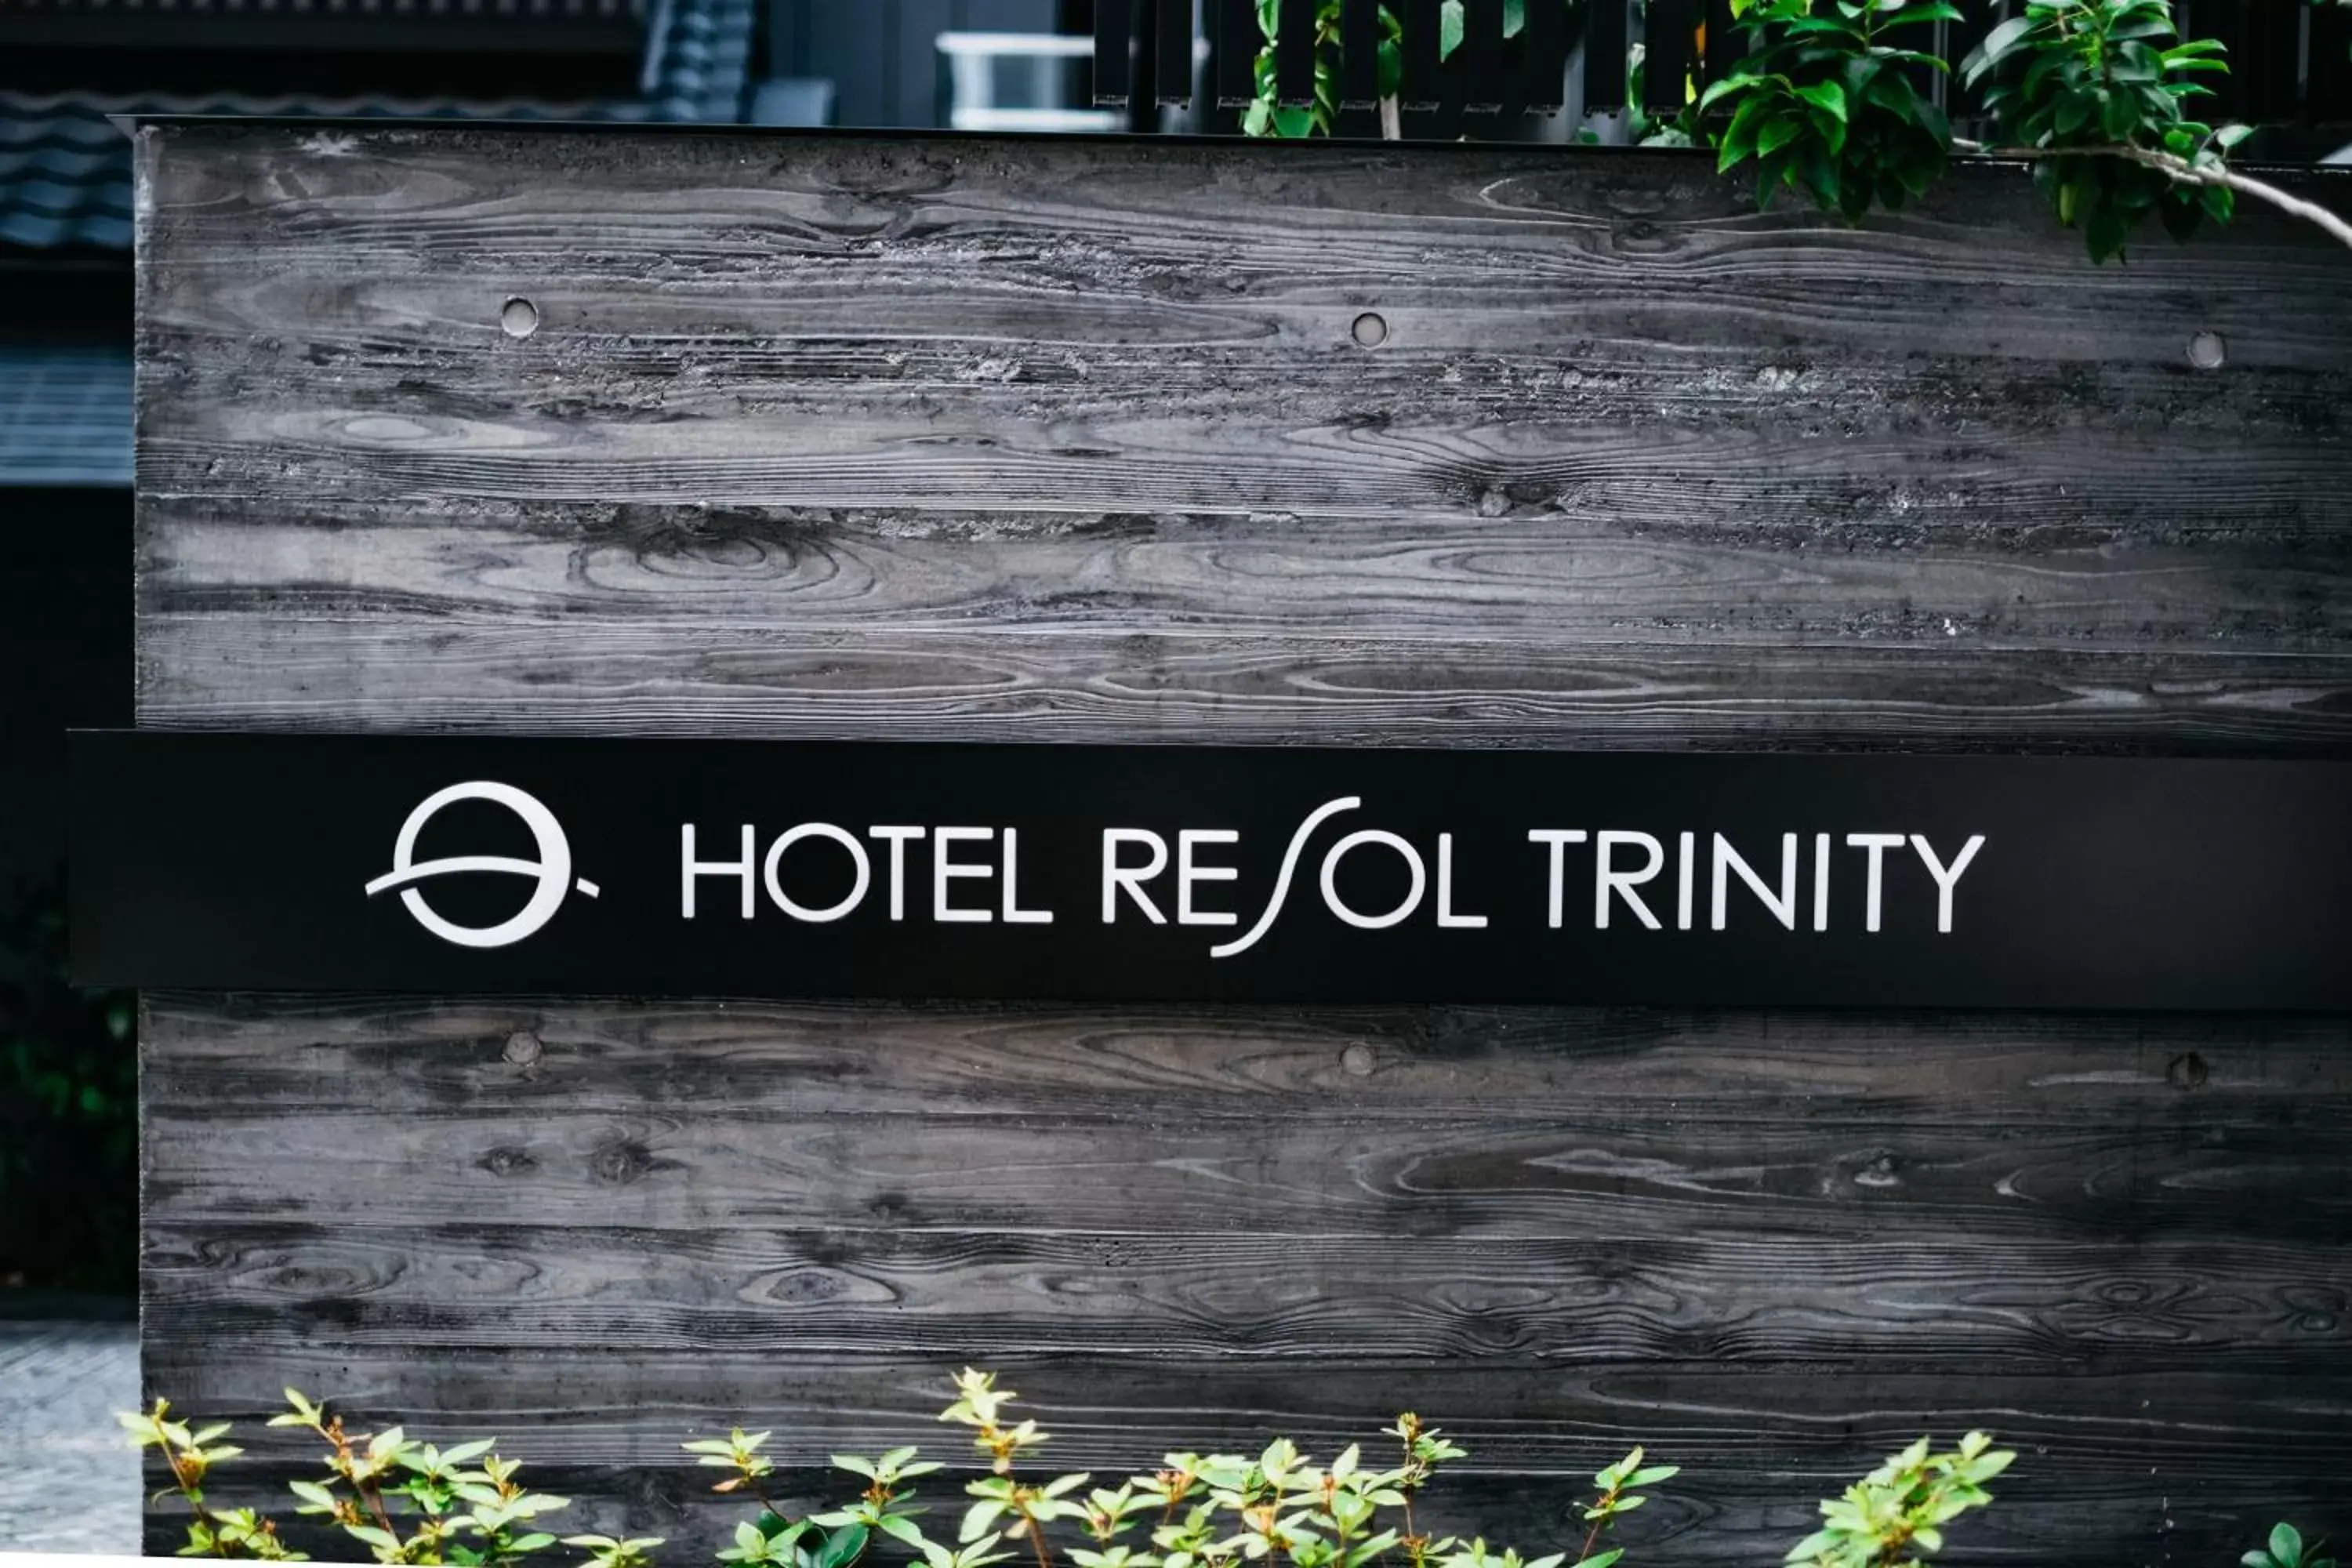 Property logo or sign in Hotel Resol Trinity Osaka